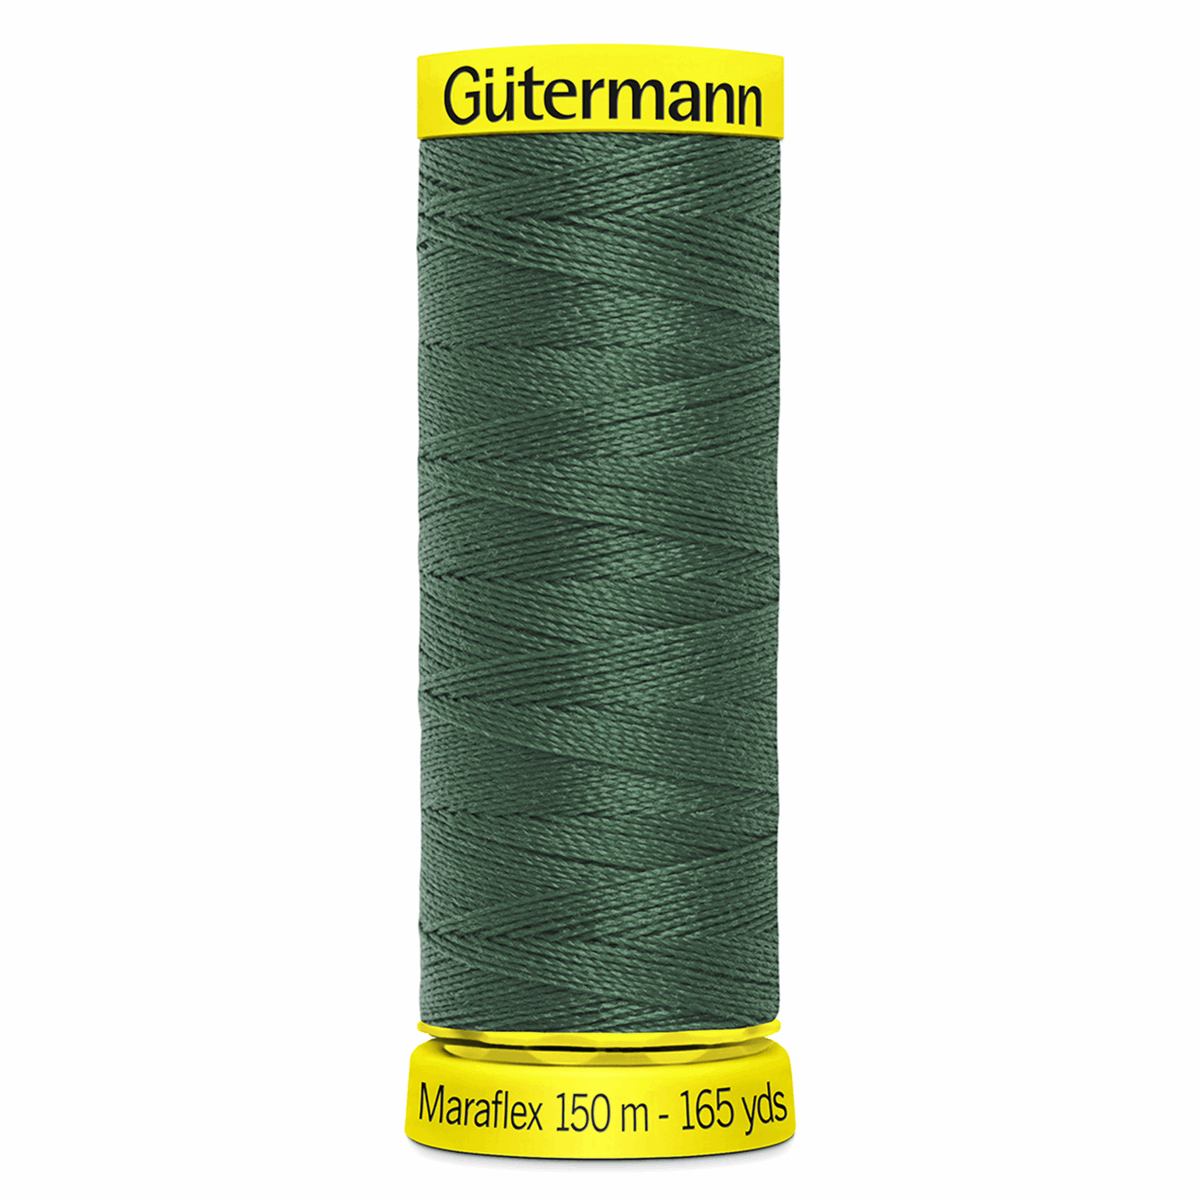 Gutermann Maraflex Elastic Sewing Thread 150m Pine Green 561